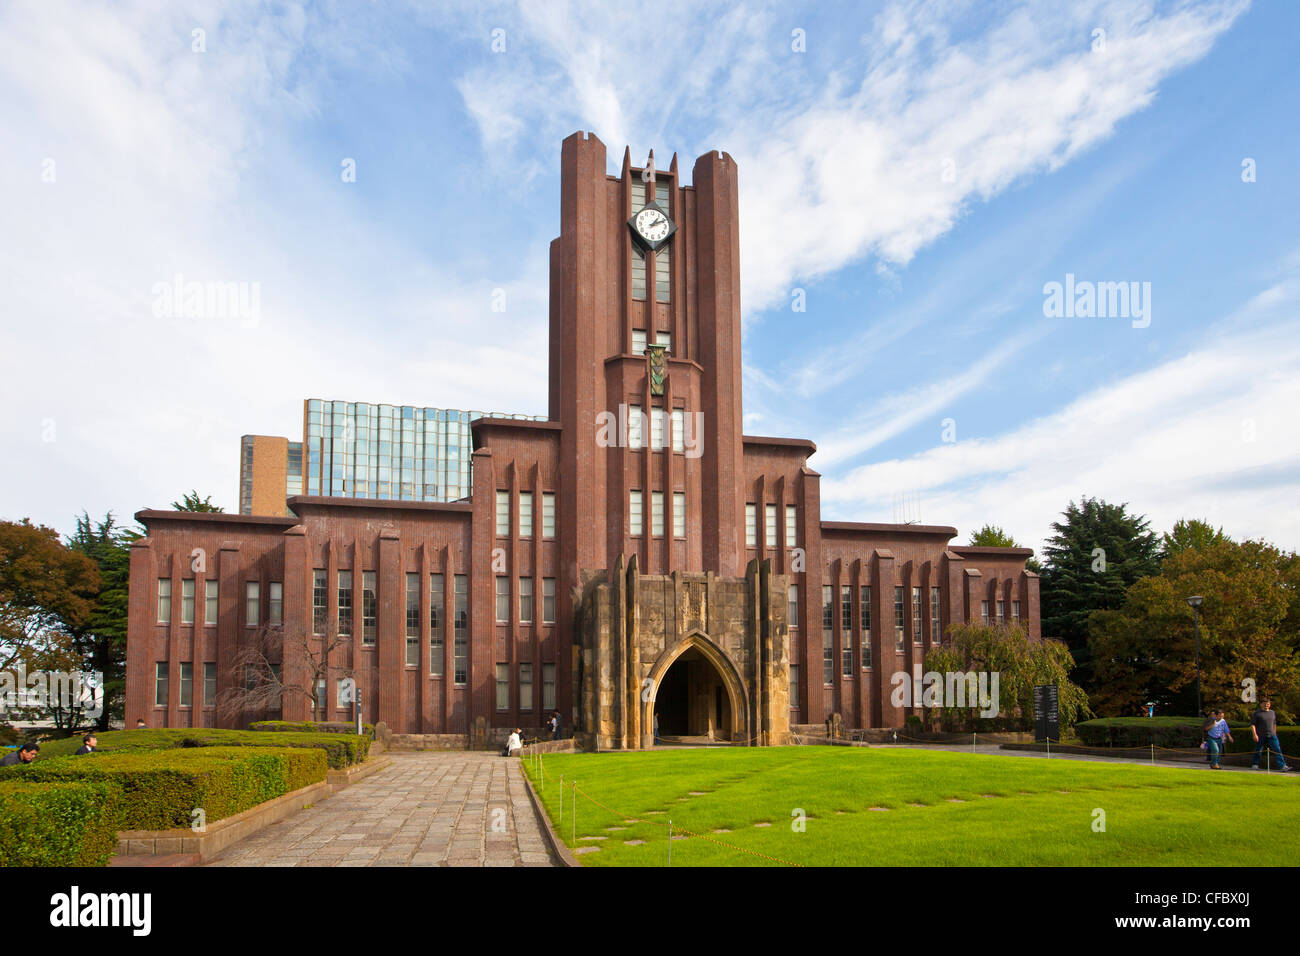 Japan, Asia, Tokyo, city, University, Yasuda, building, advanced, best, brick, clock, famous, green, lawn, old, prestigious, Stock Photo